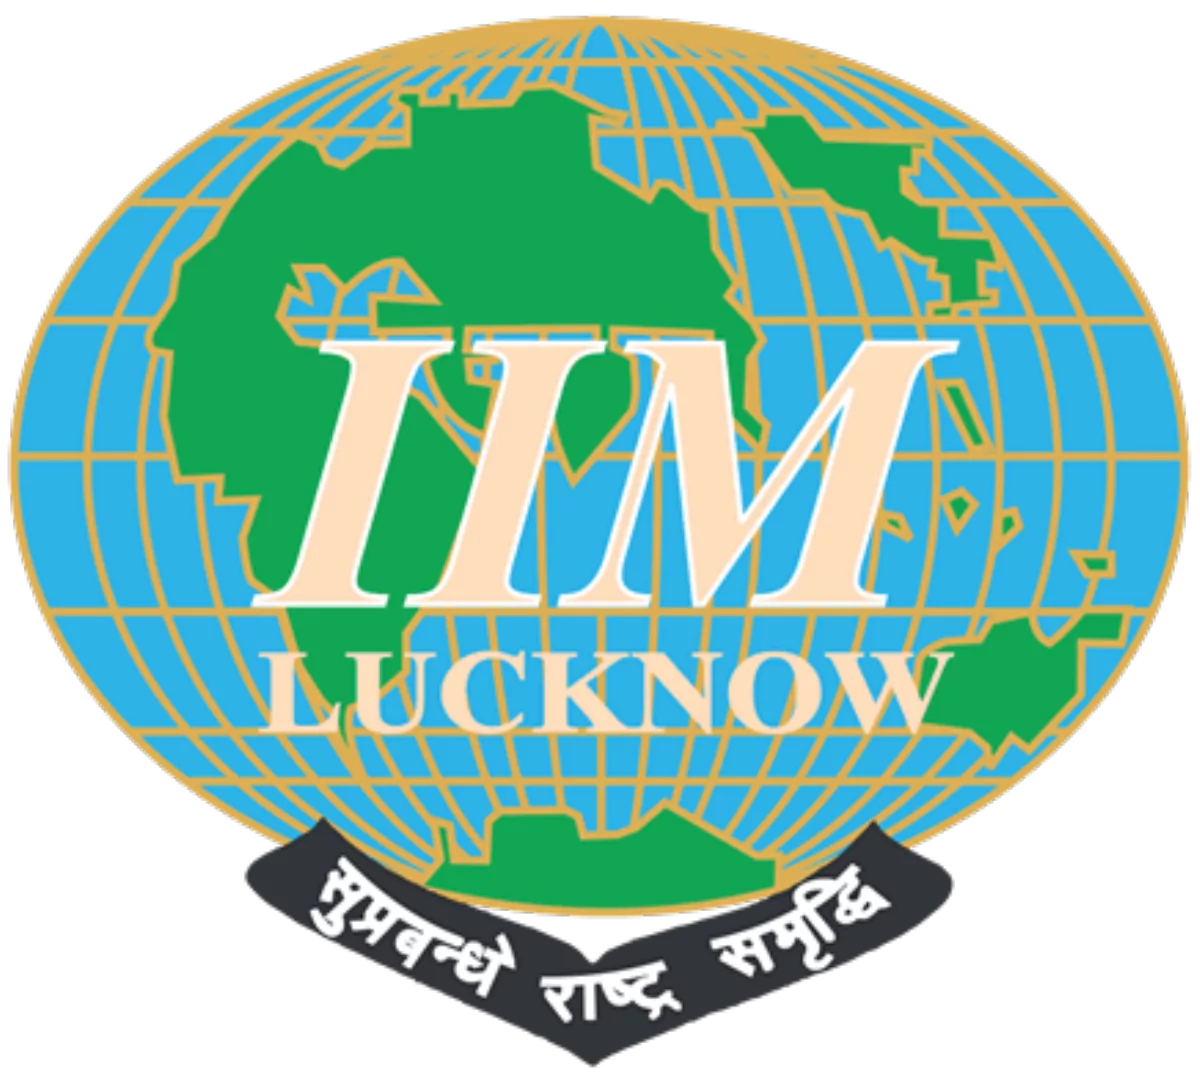 IIM Lucknow: Indian Institute of Management Lucknow